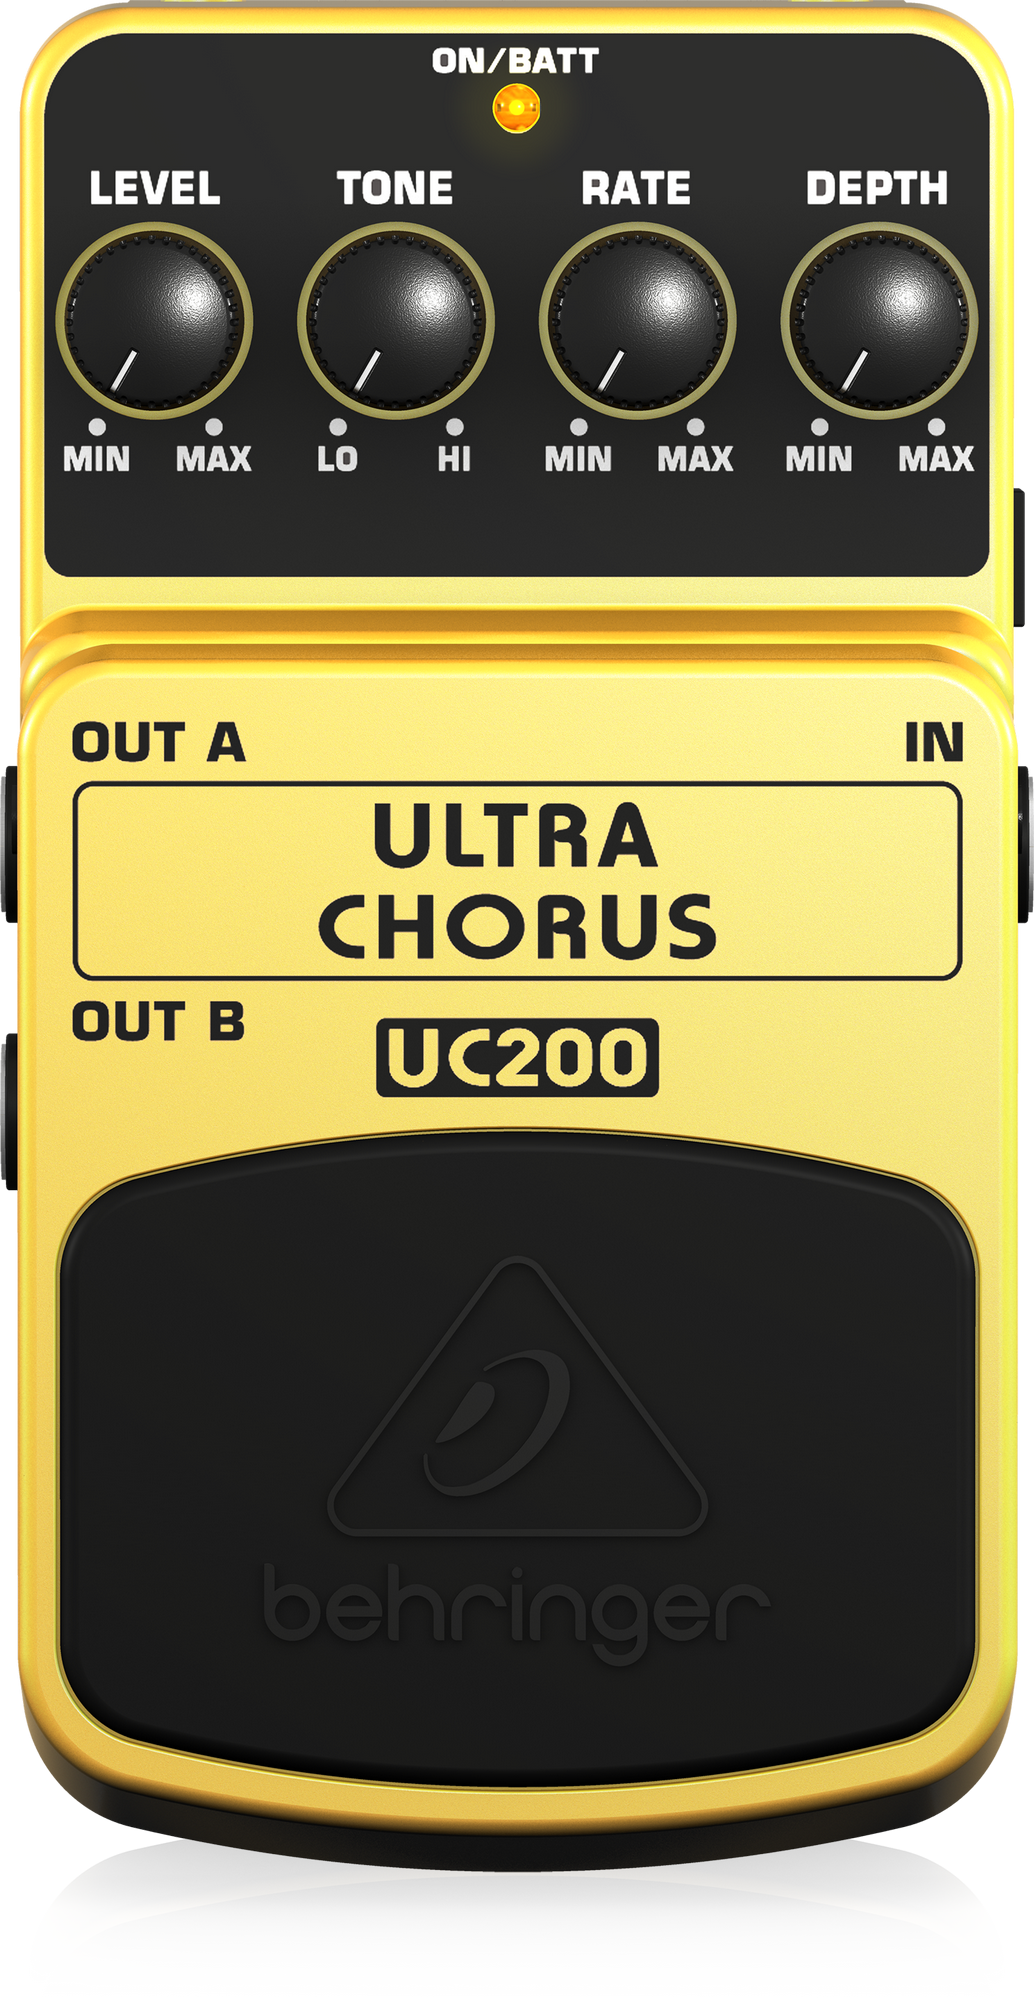 ULTRA CHORUS UC200